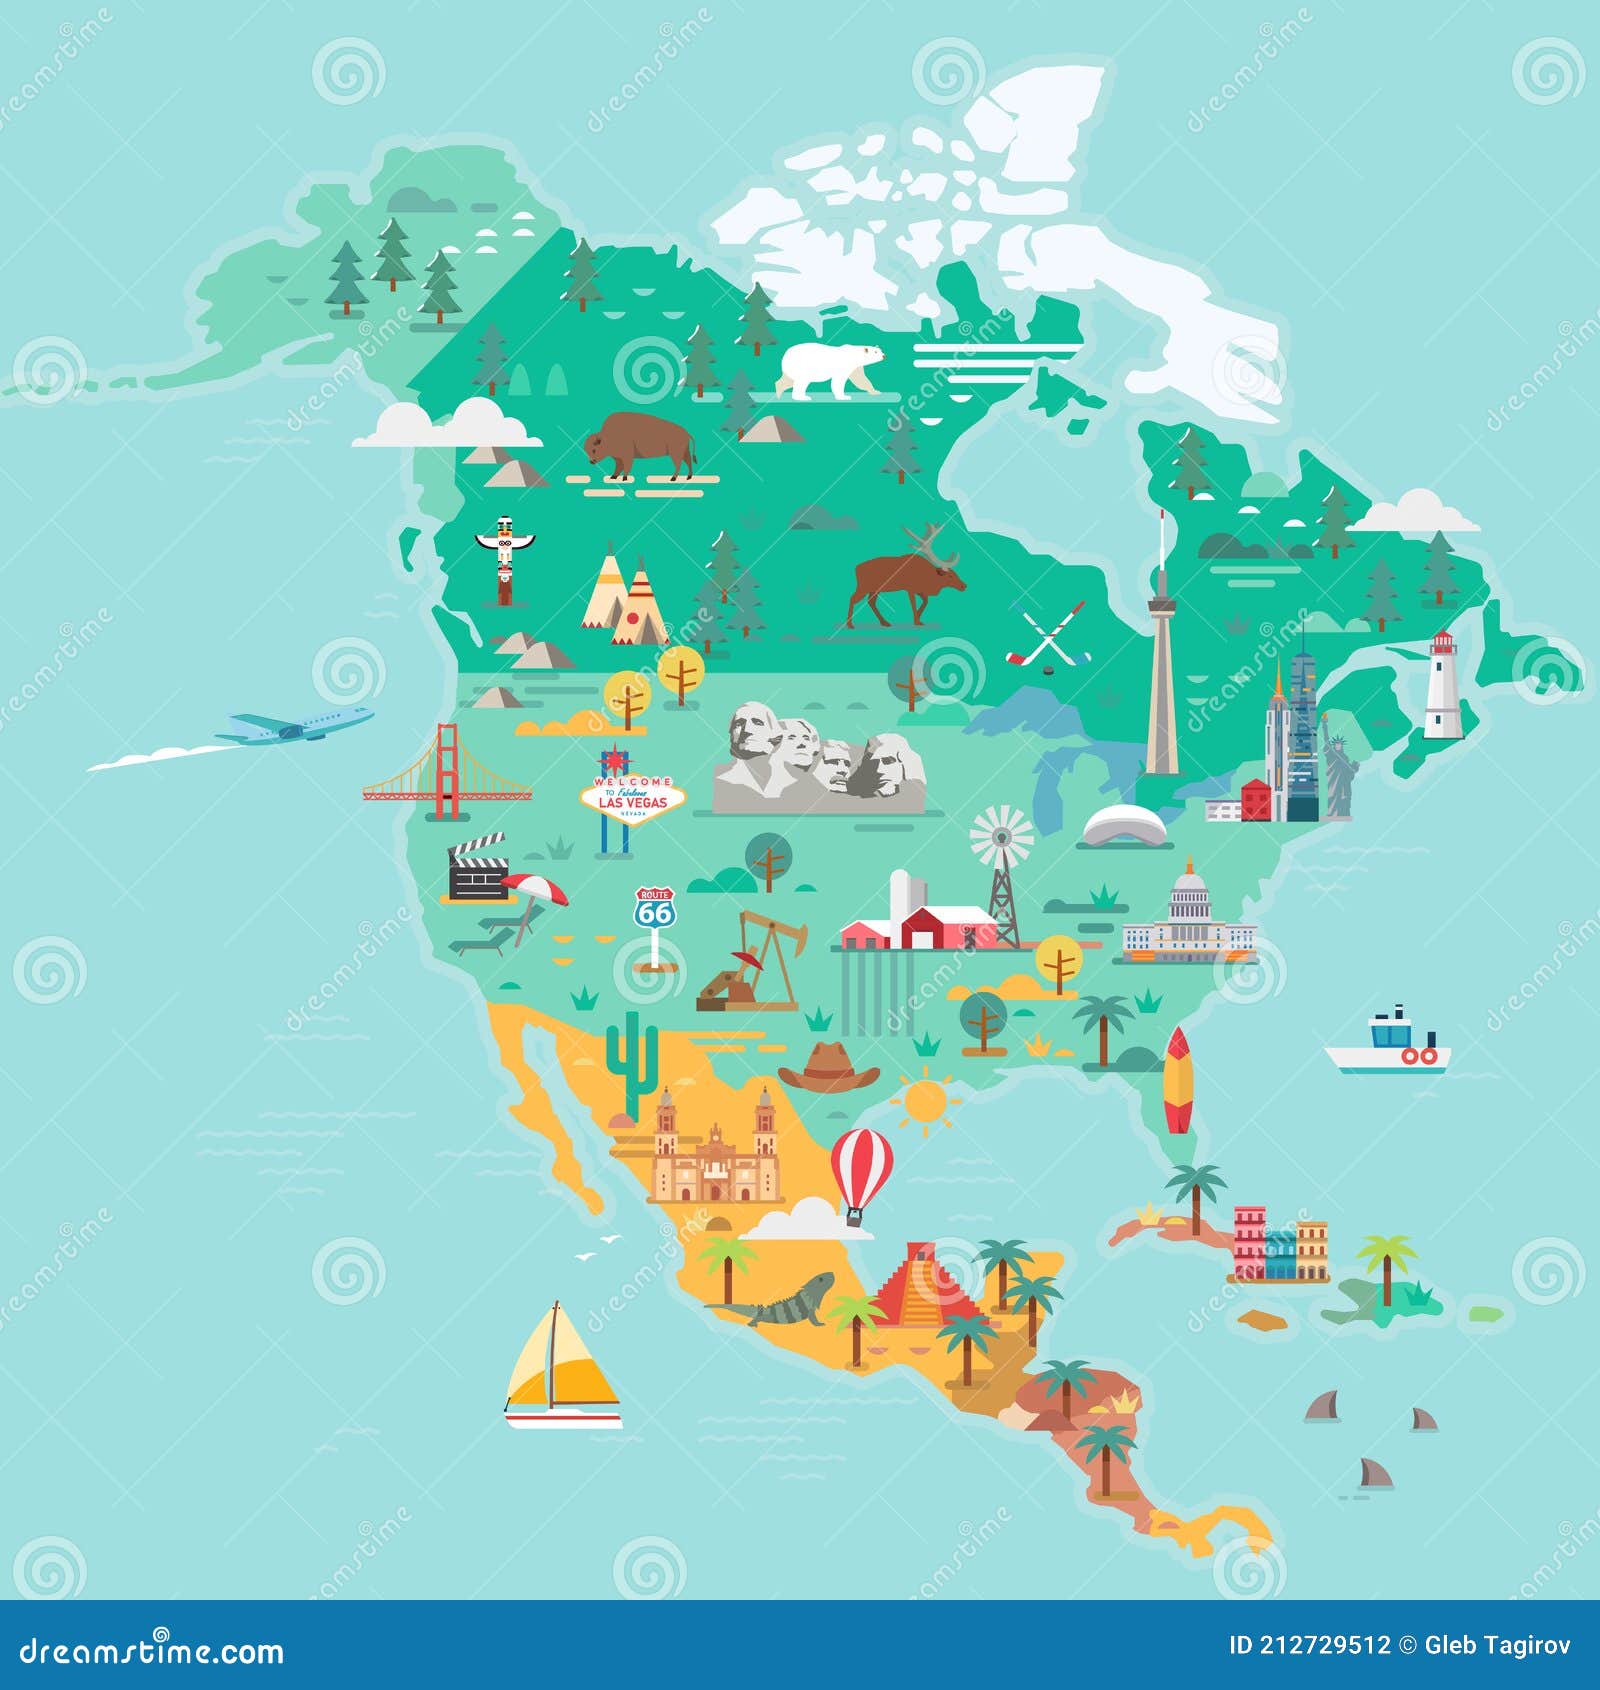 north america map. tourist and travel landmarks